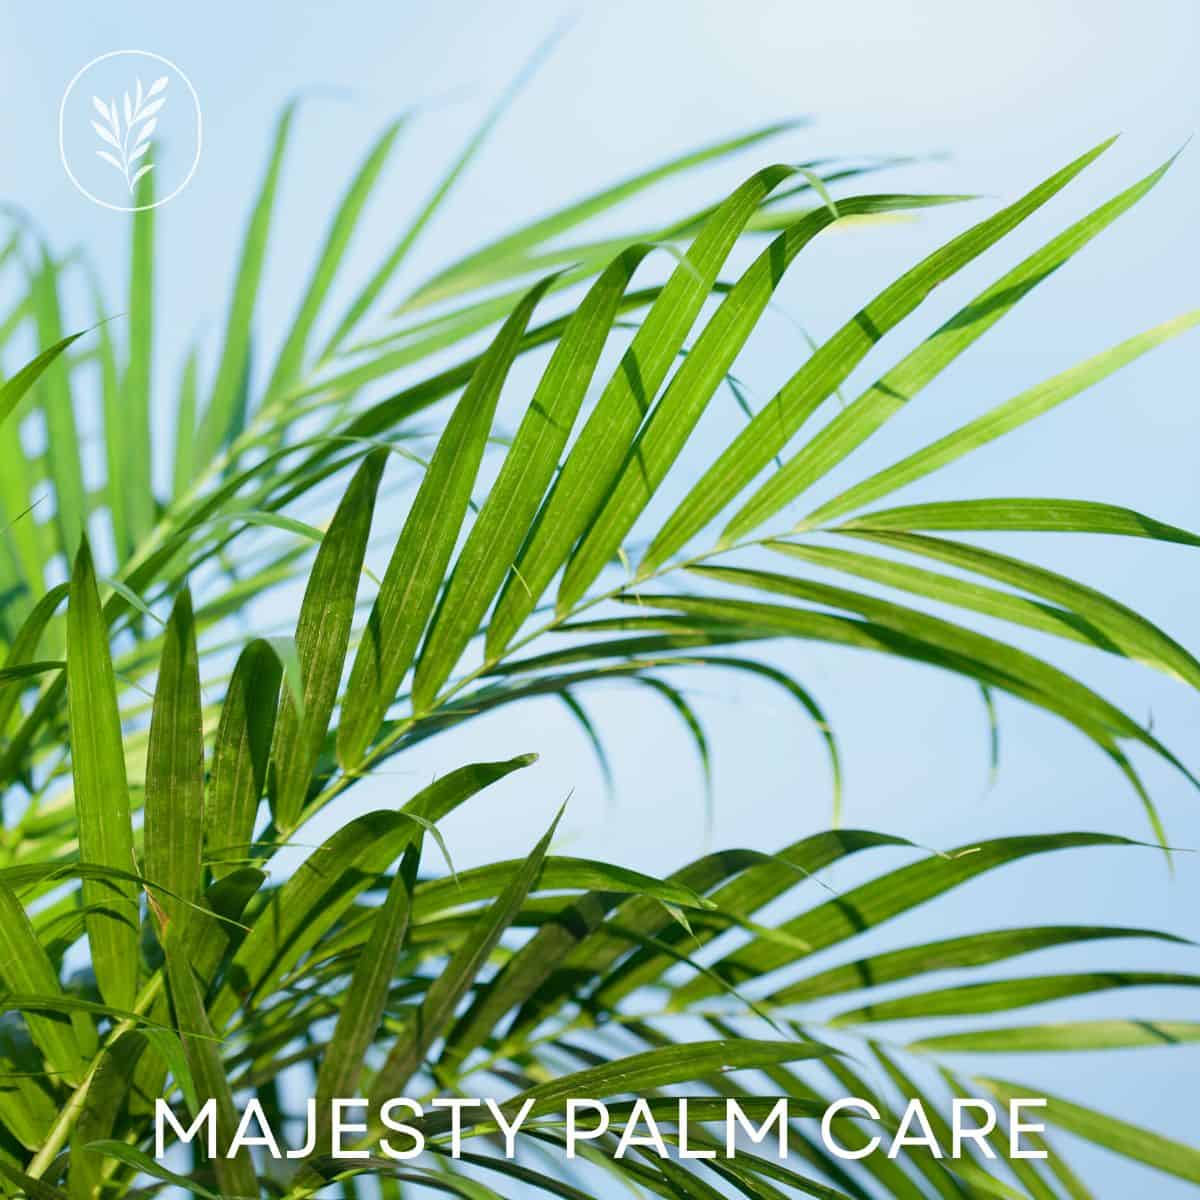 Majesty palm care via @home4theharvest